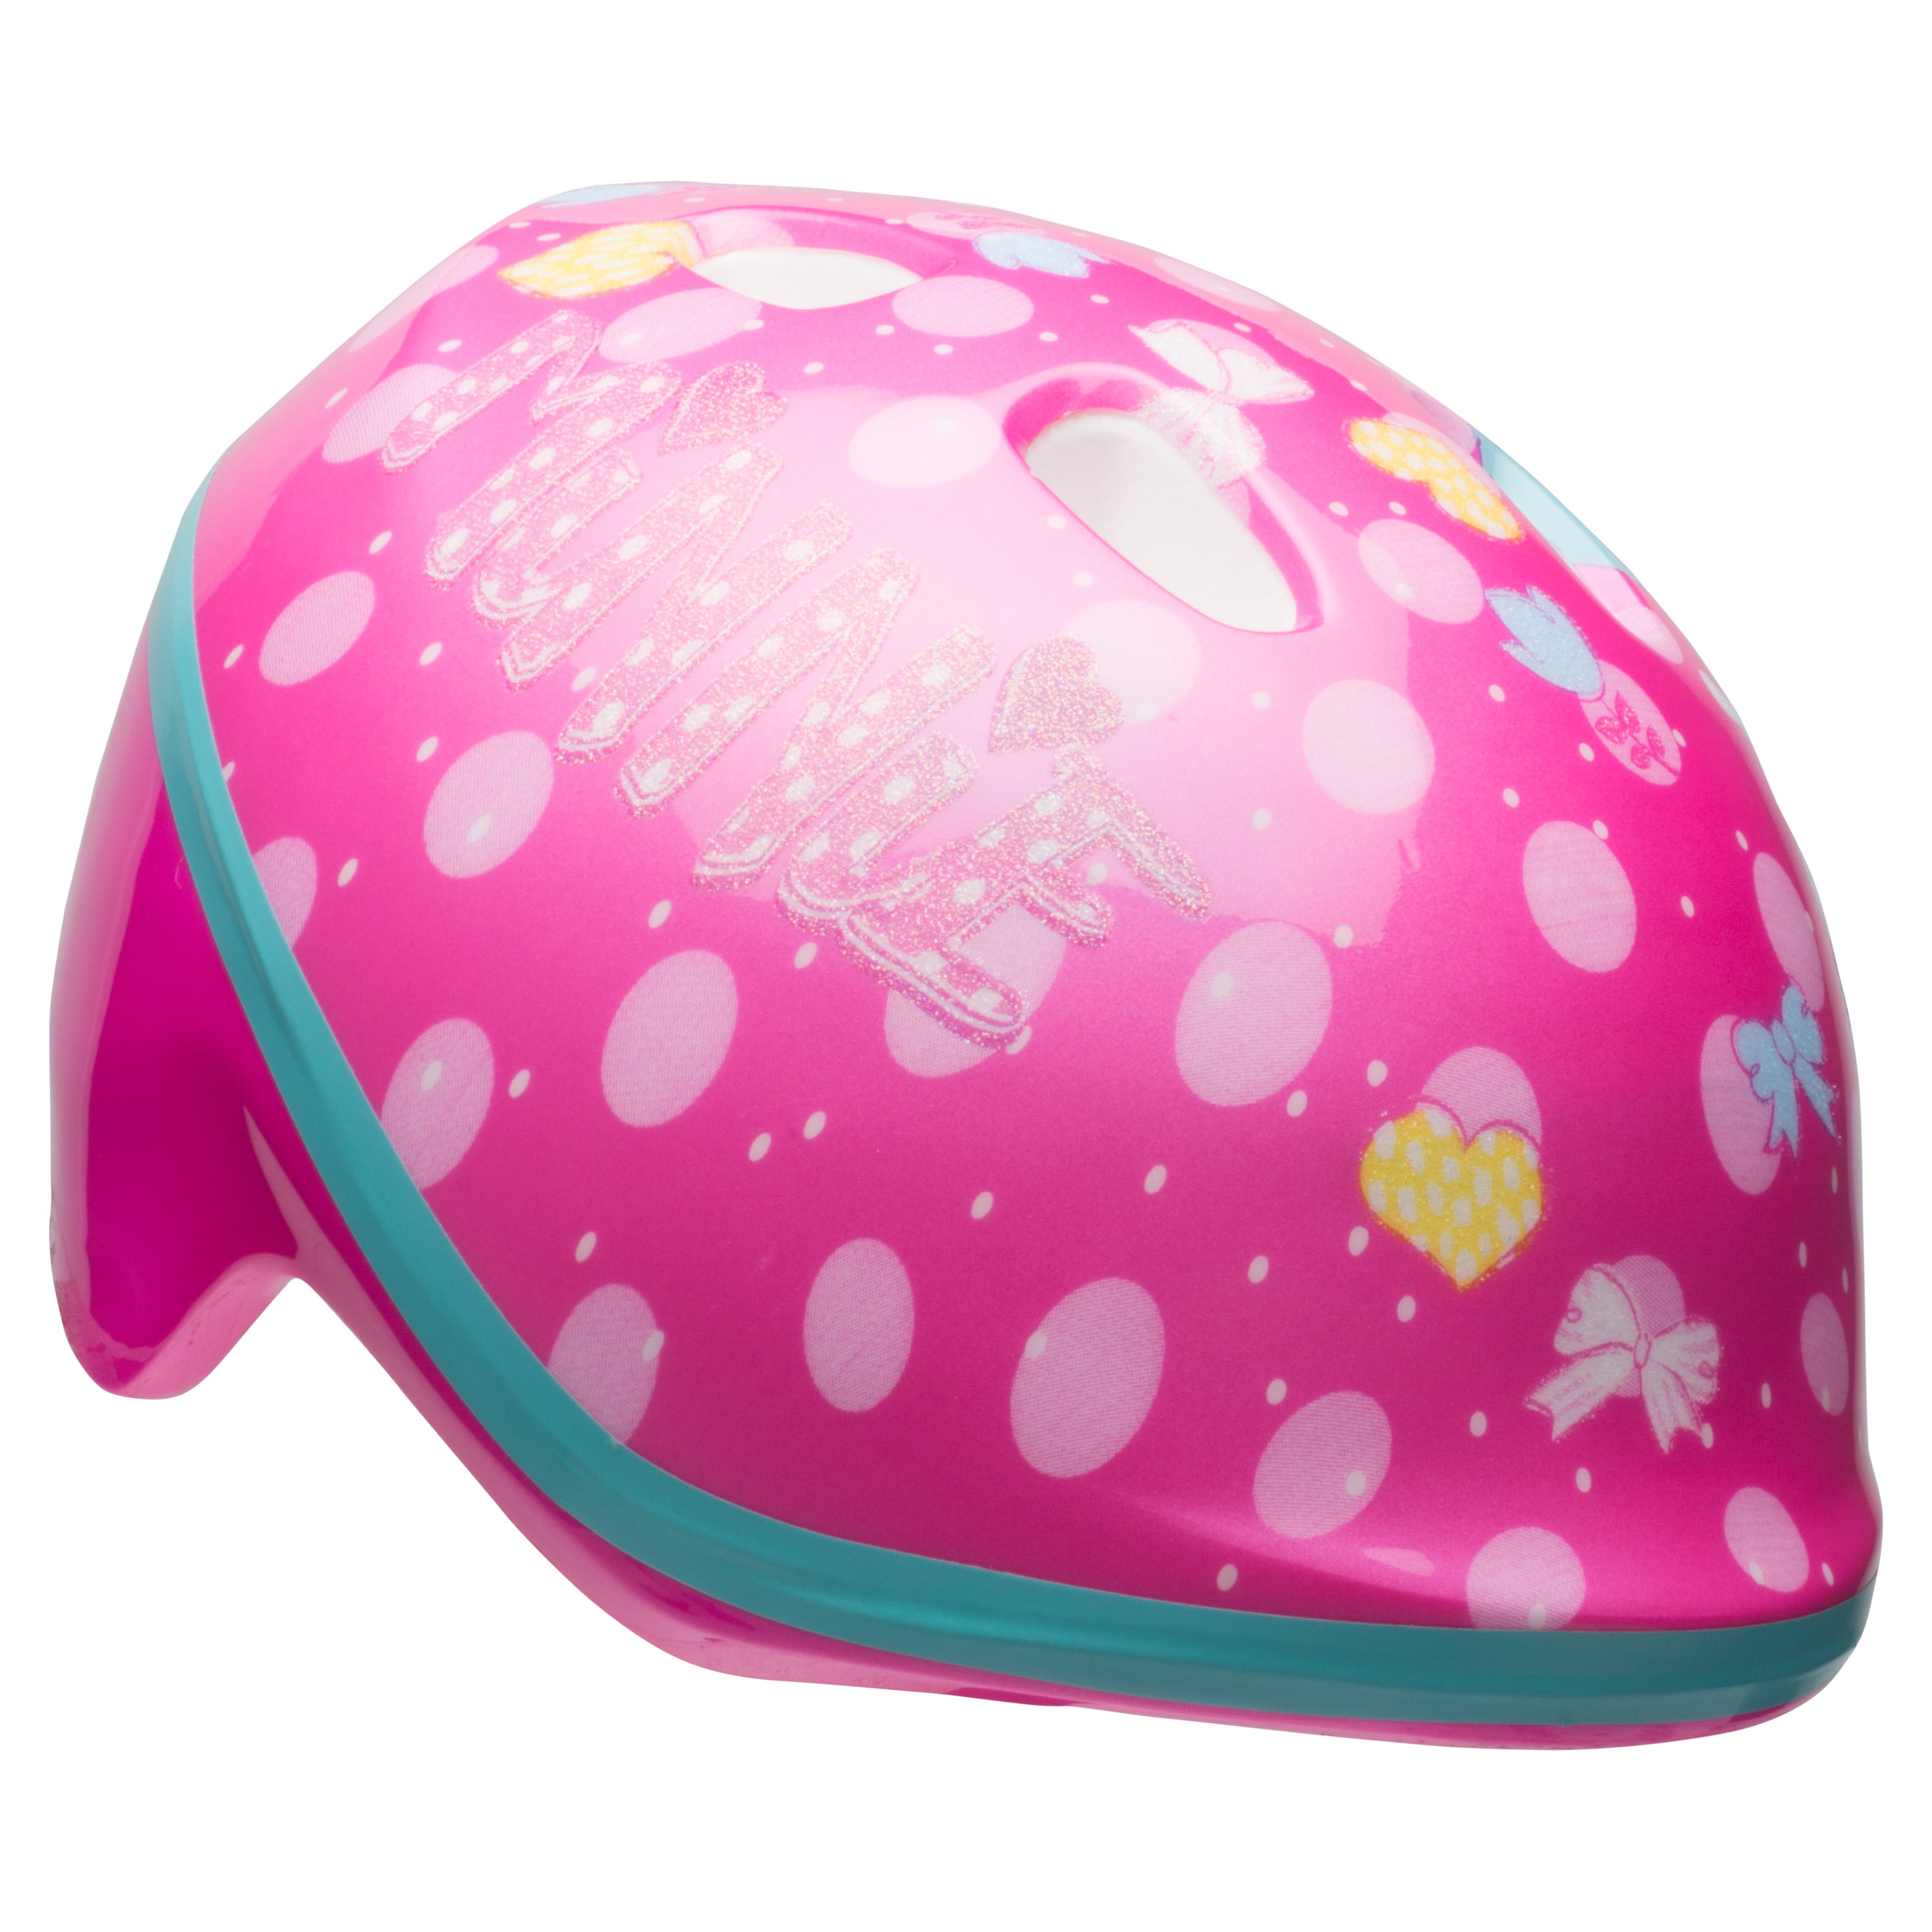 Pink new but damaged Details about   Schwinn infant helmet 